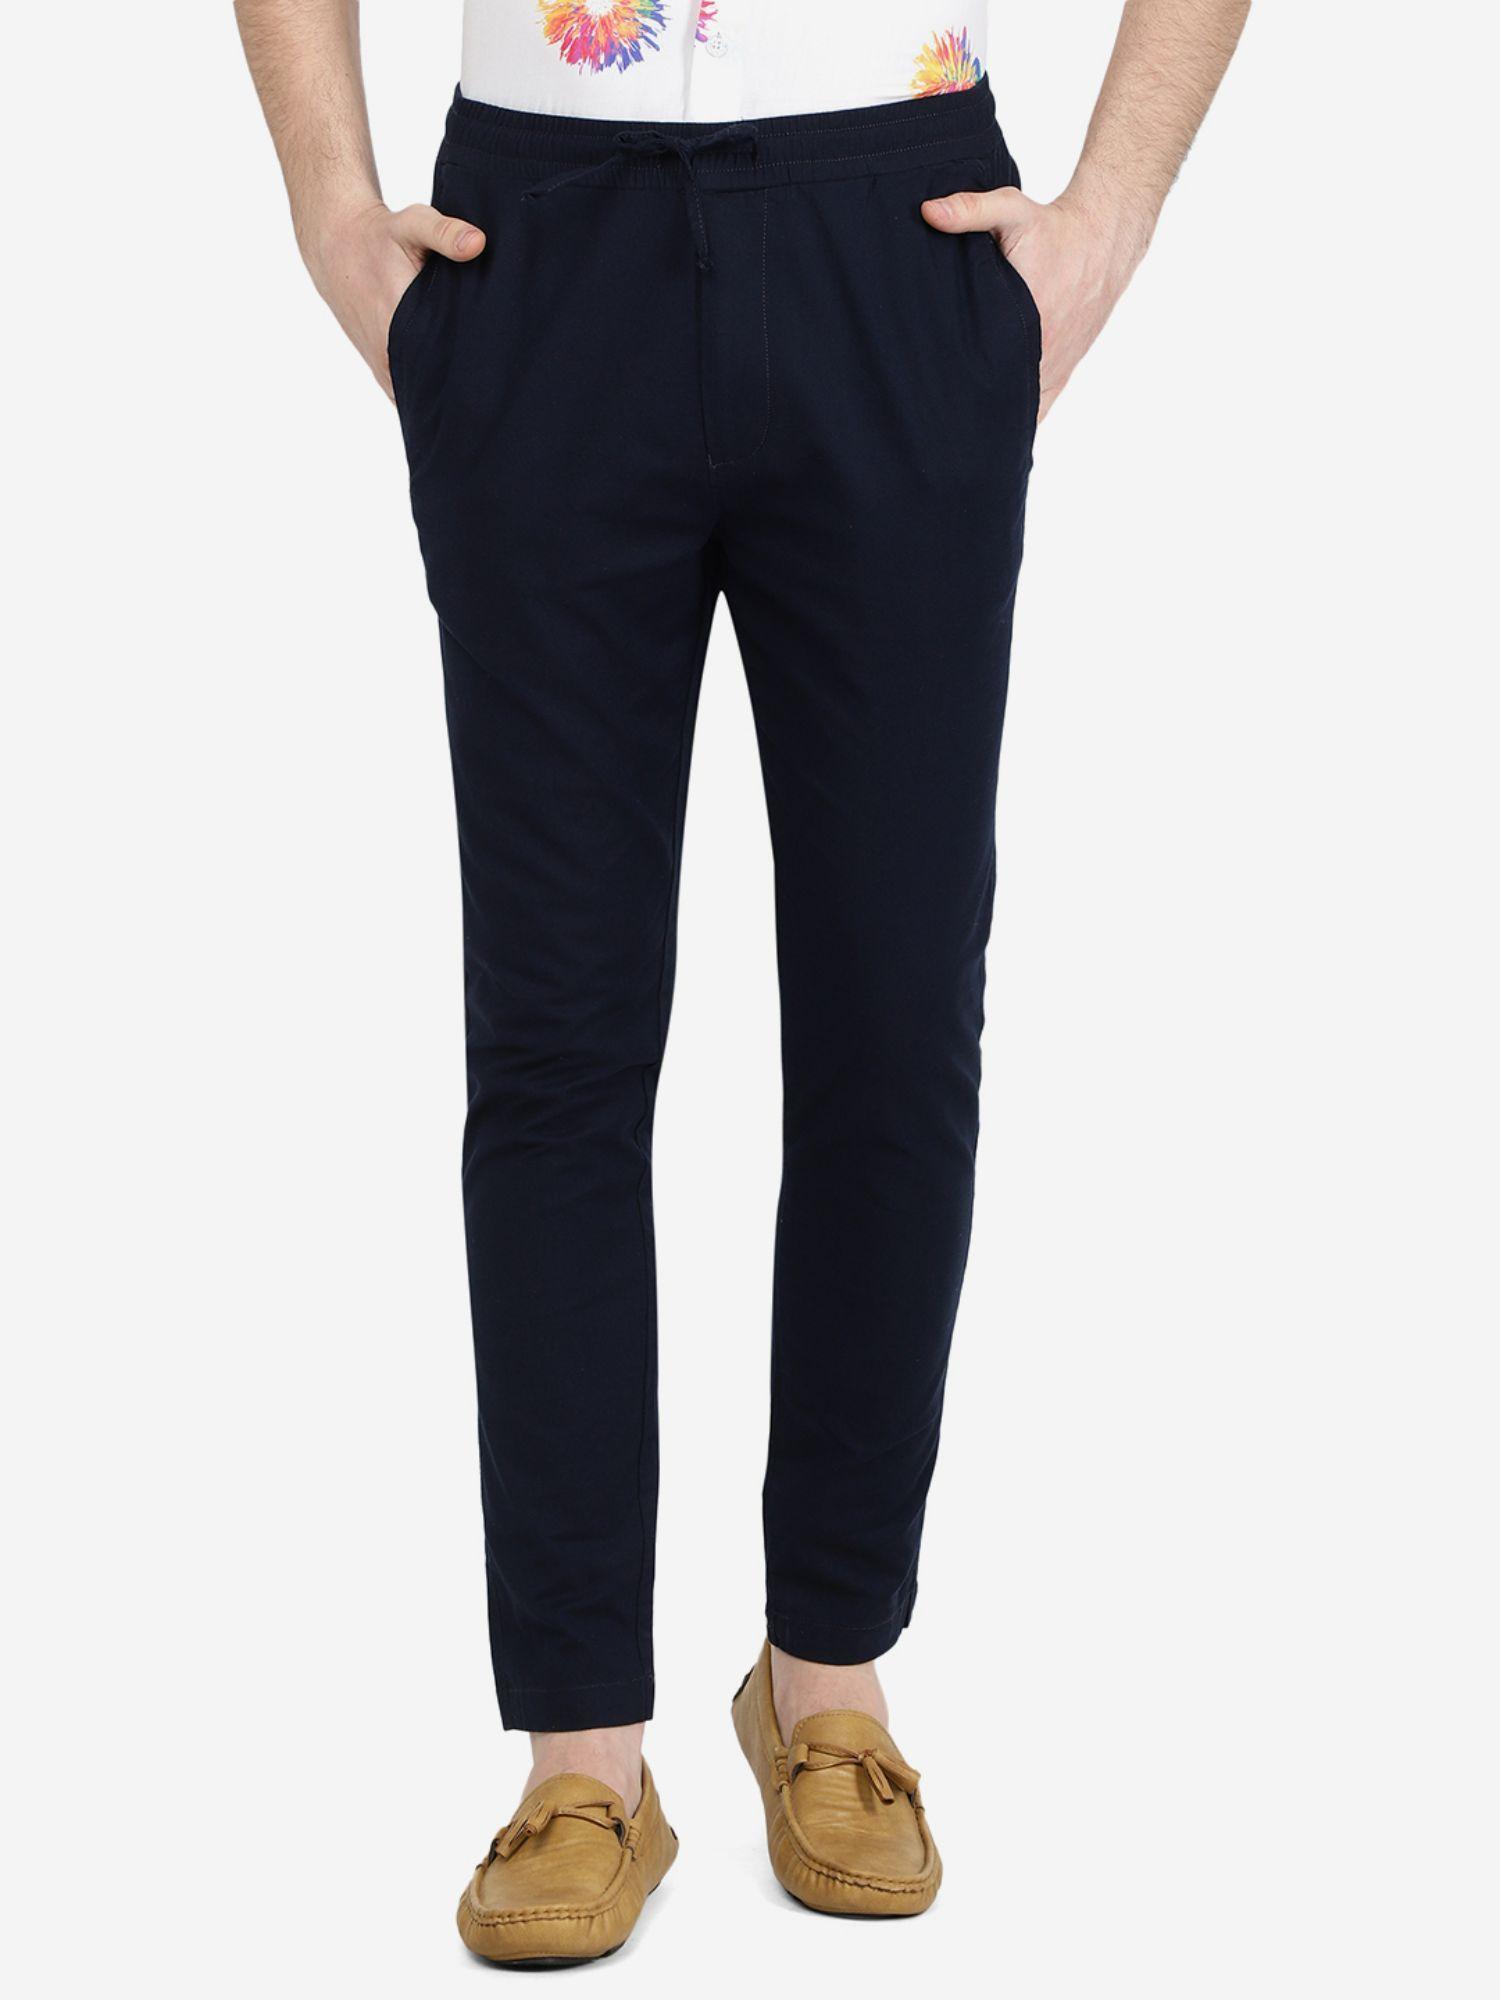 men's solid navy blue cotton regular fit track pants